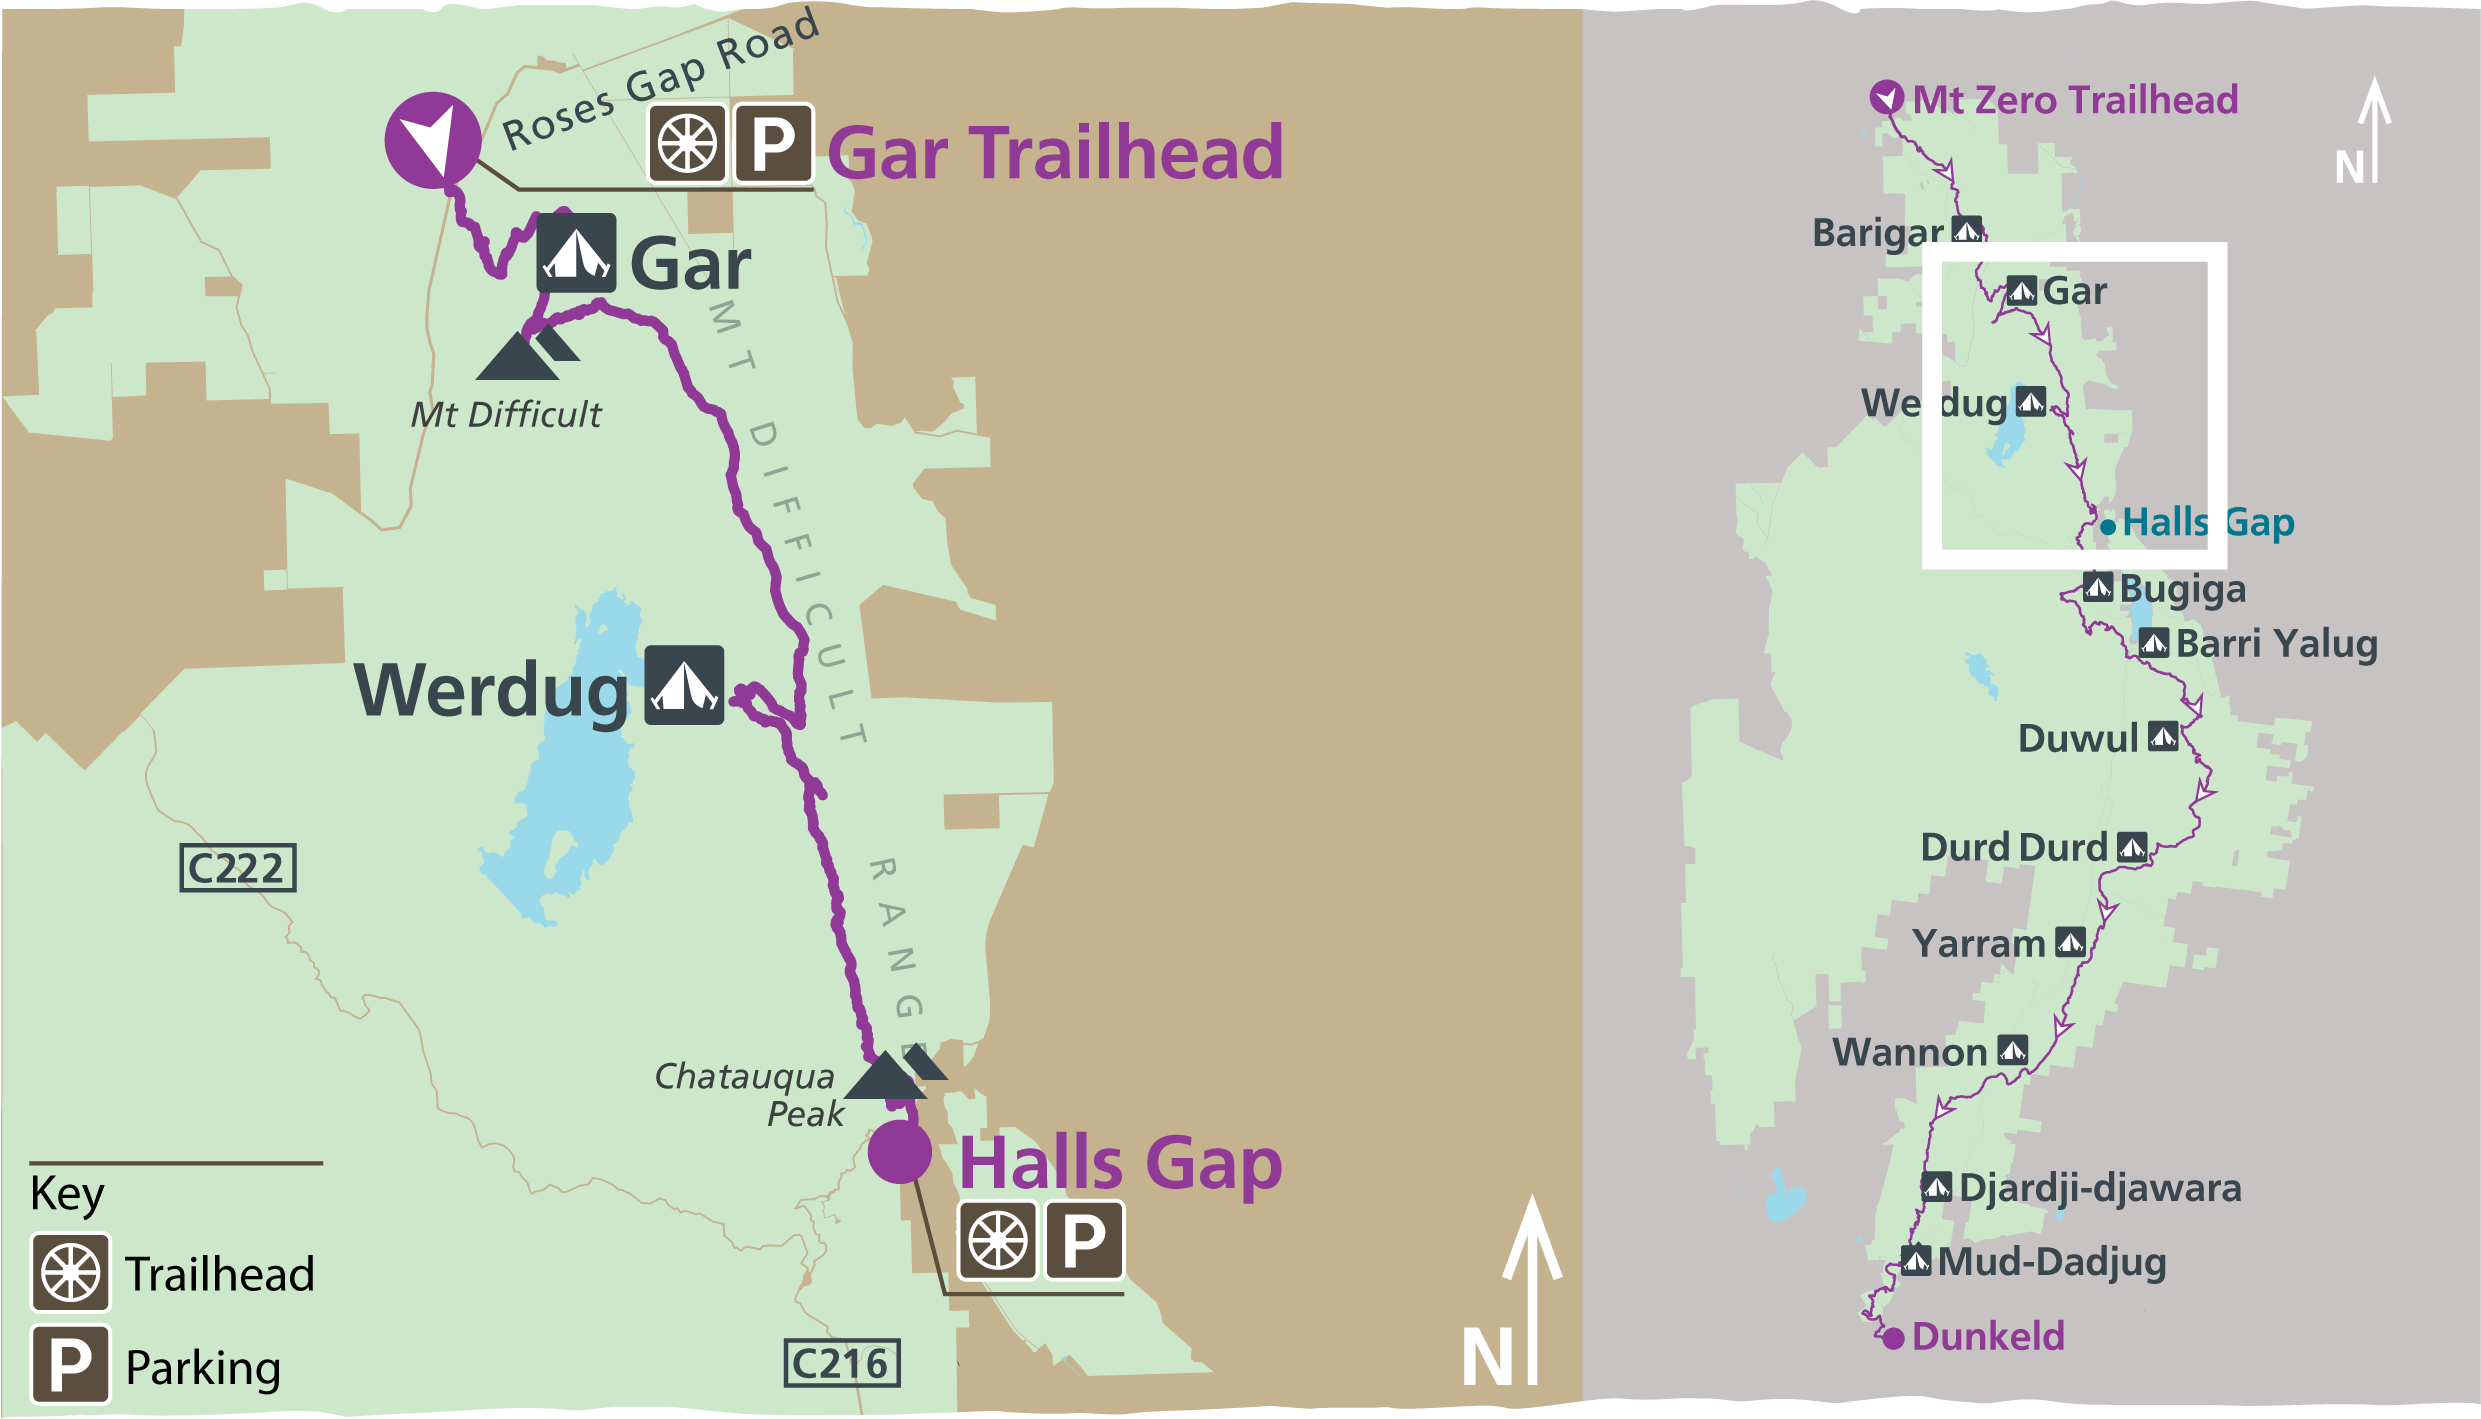 Grampians Peaks Trail - Northern 3 day hike maps - Gar and Werdug multi-day hike